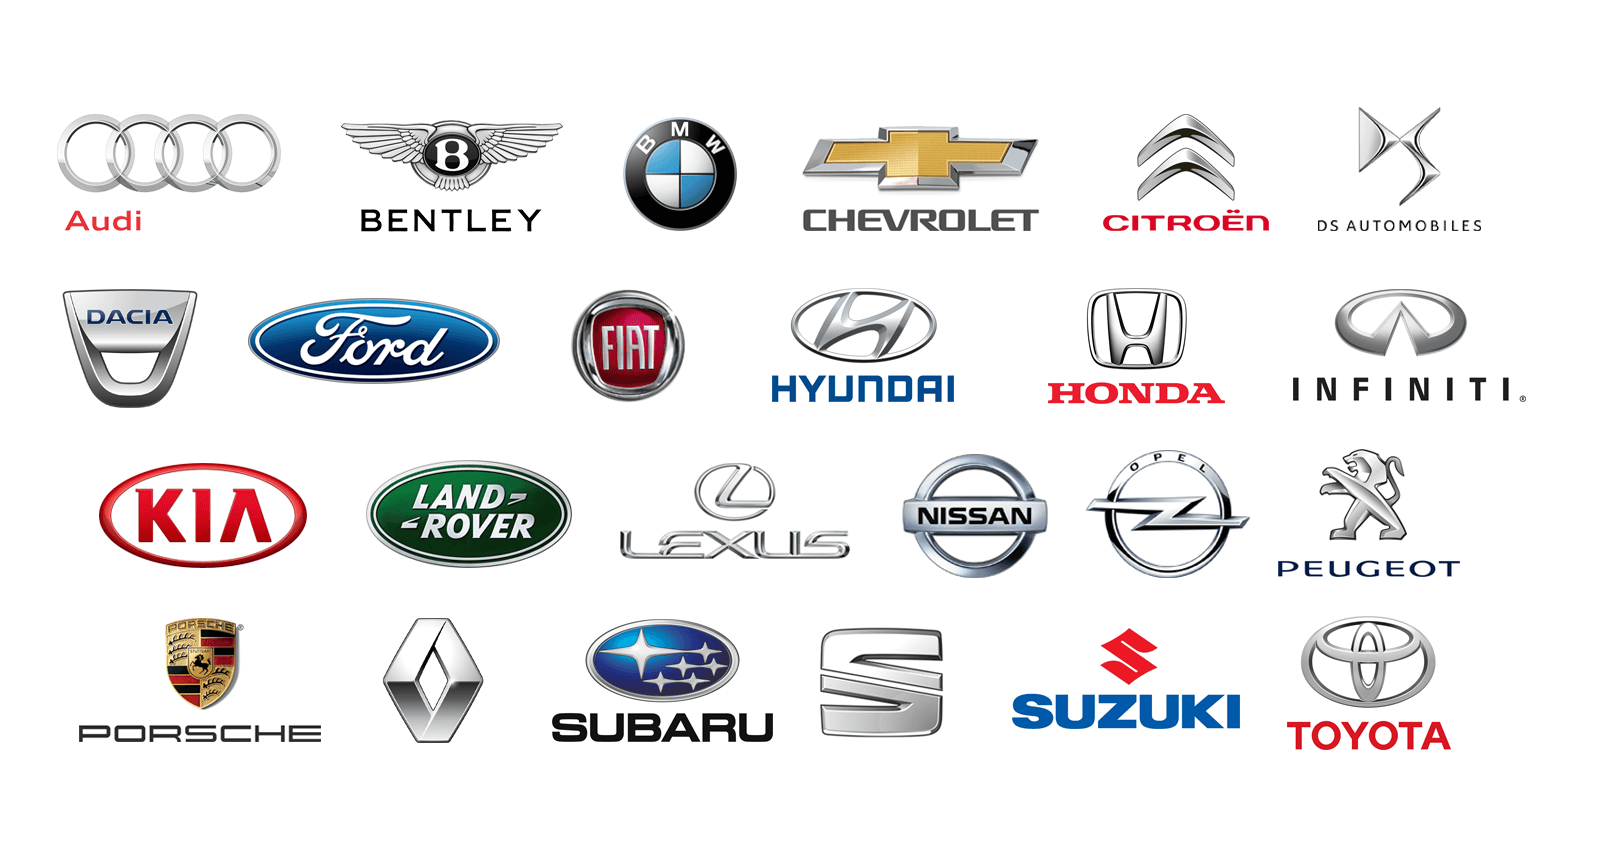 Marcas de coches: ¿a qué grupo automovilístivo pertenece cada una? | Carnovo